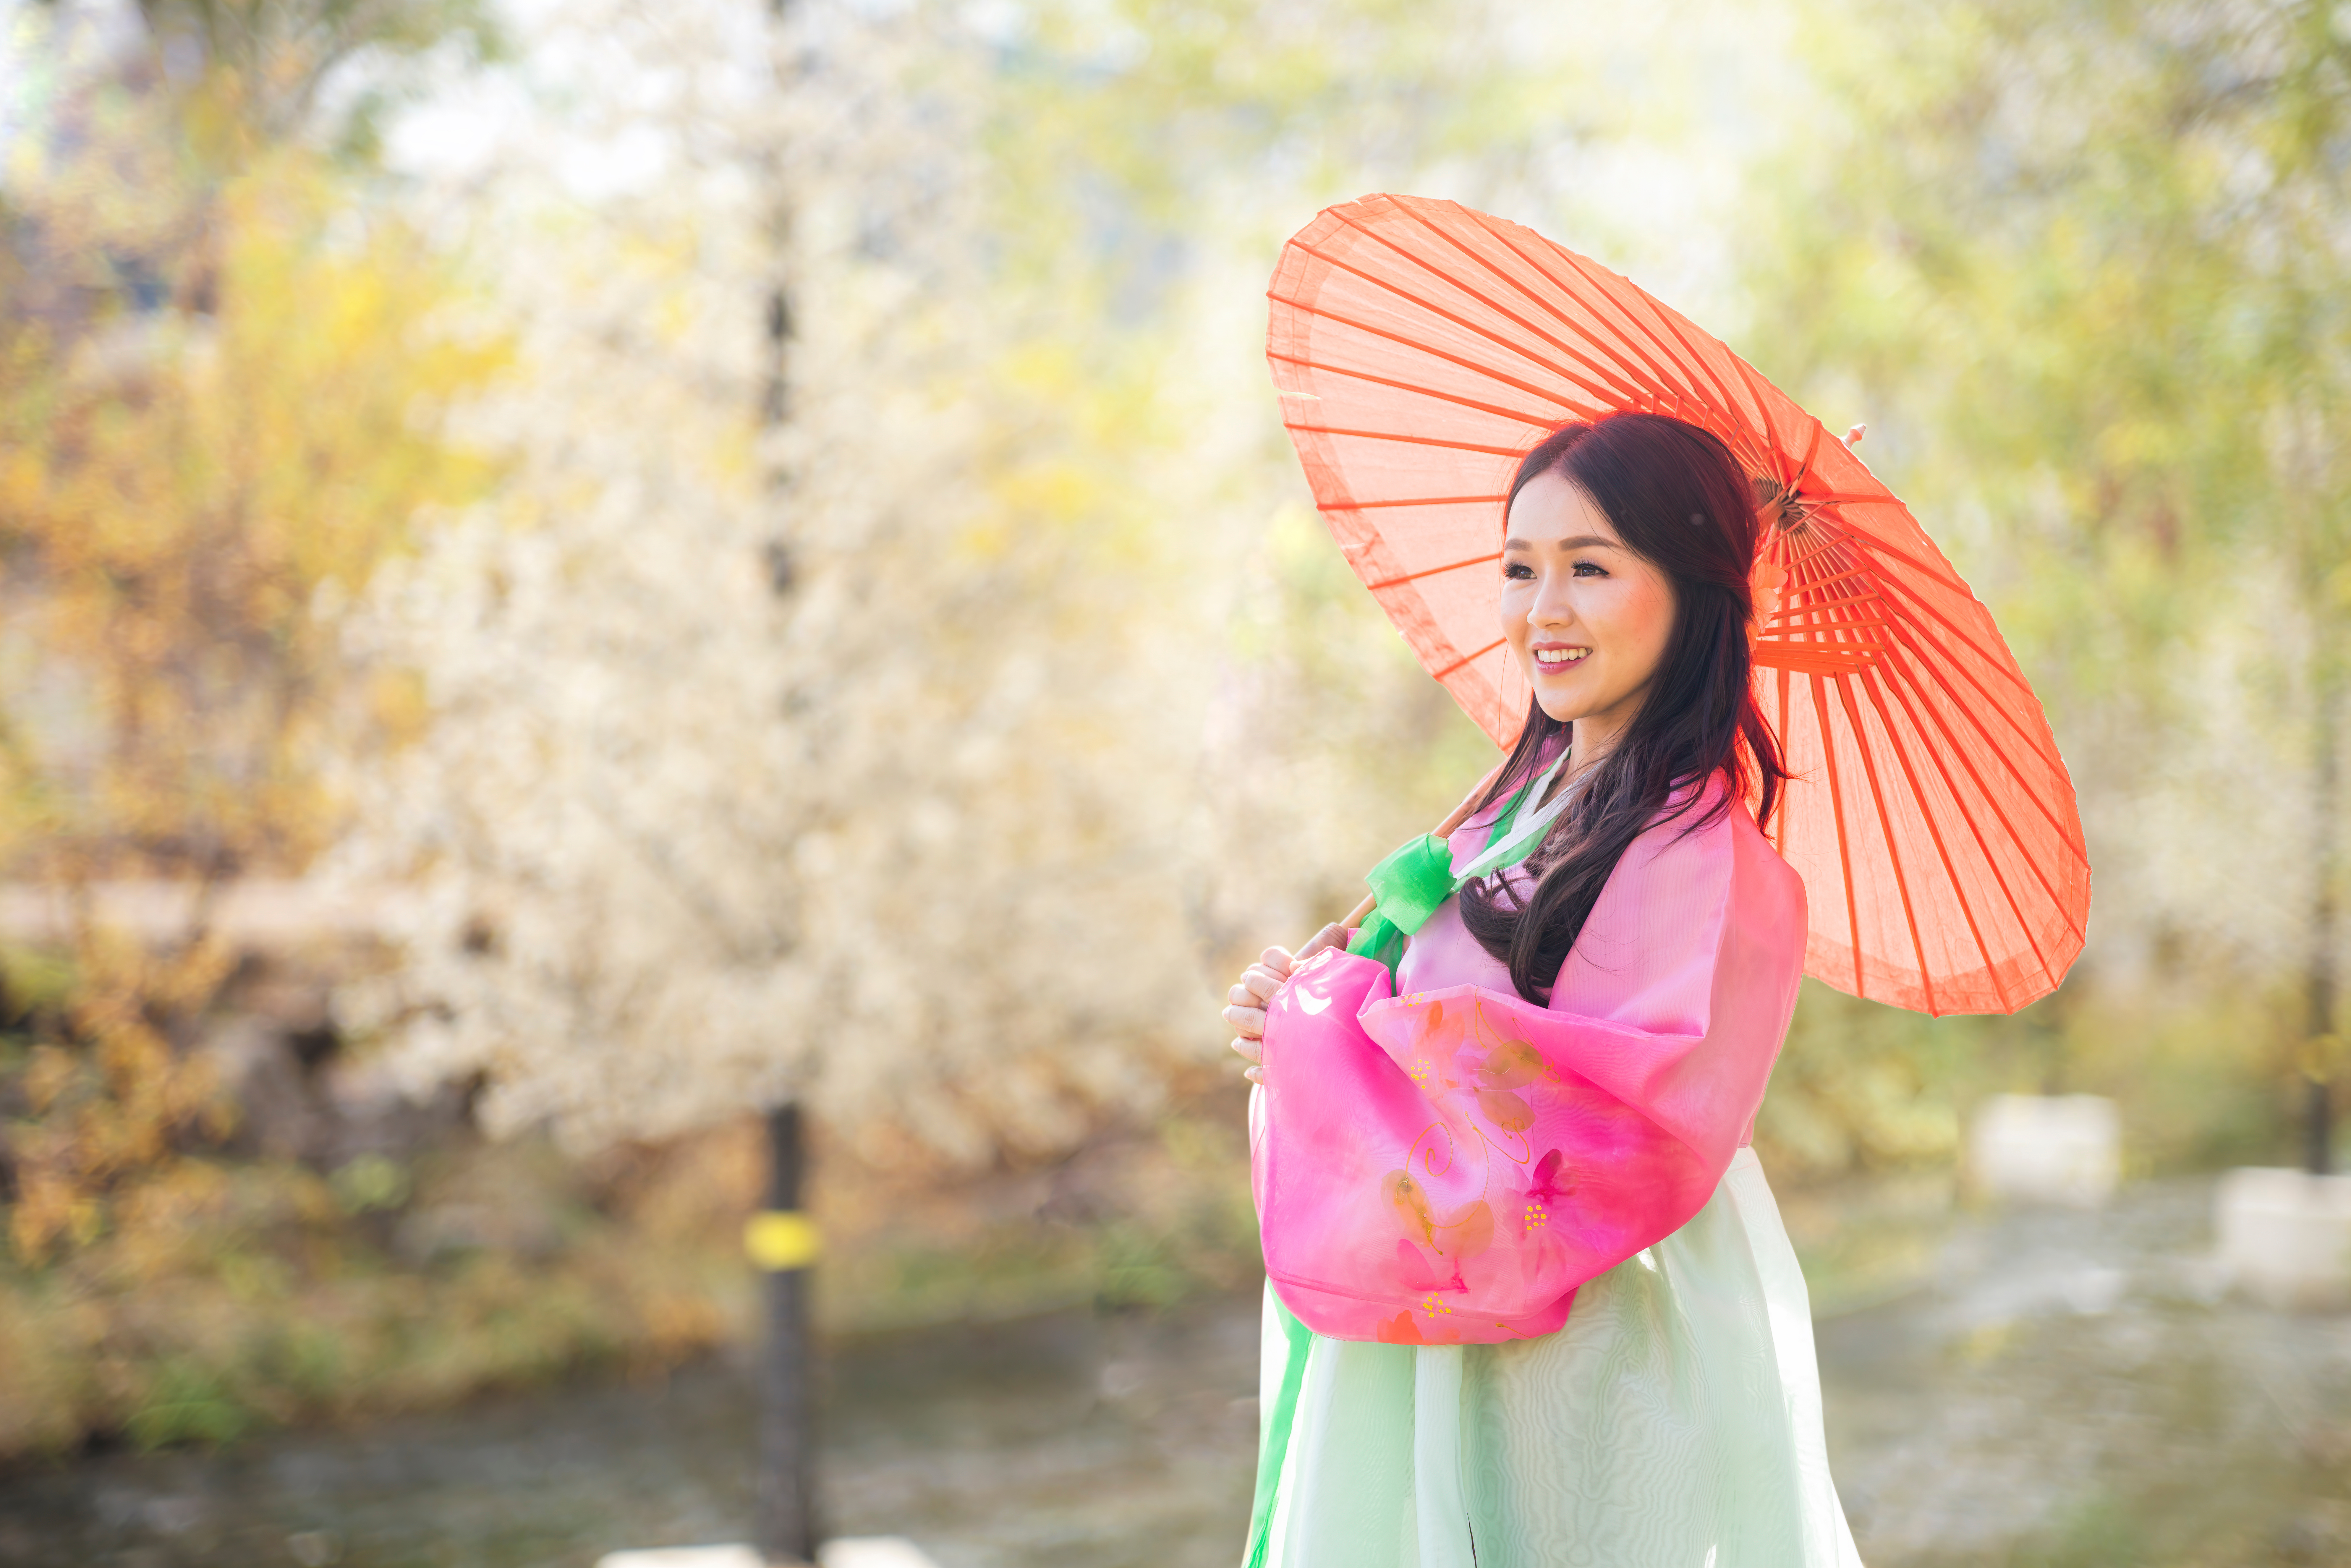 Korean girl wearing a hanbok and holding a red umbrella